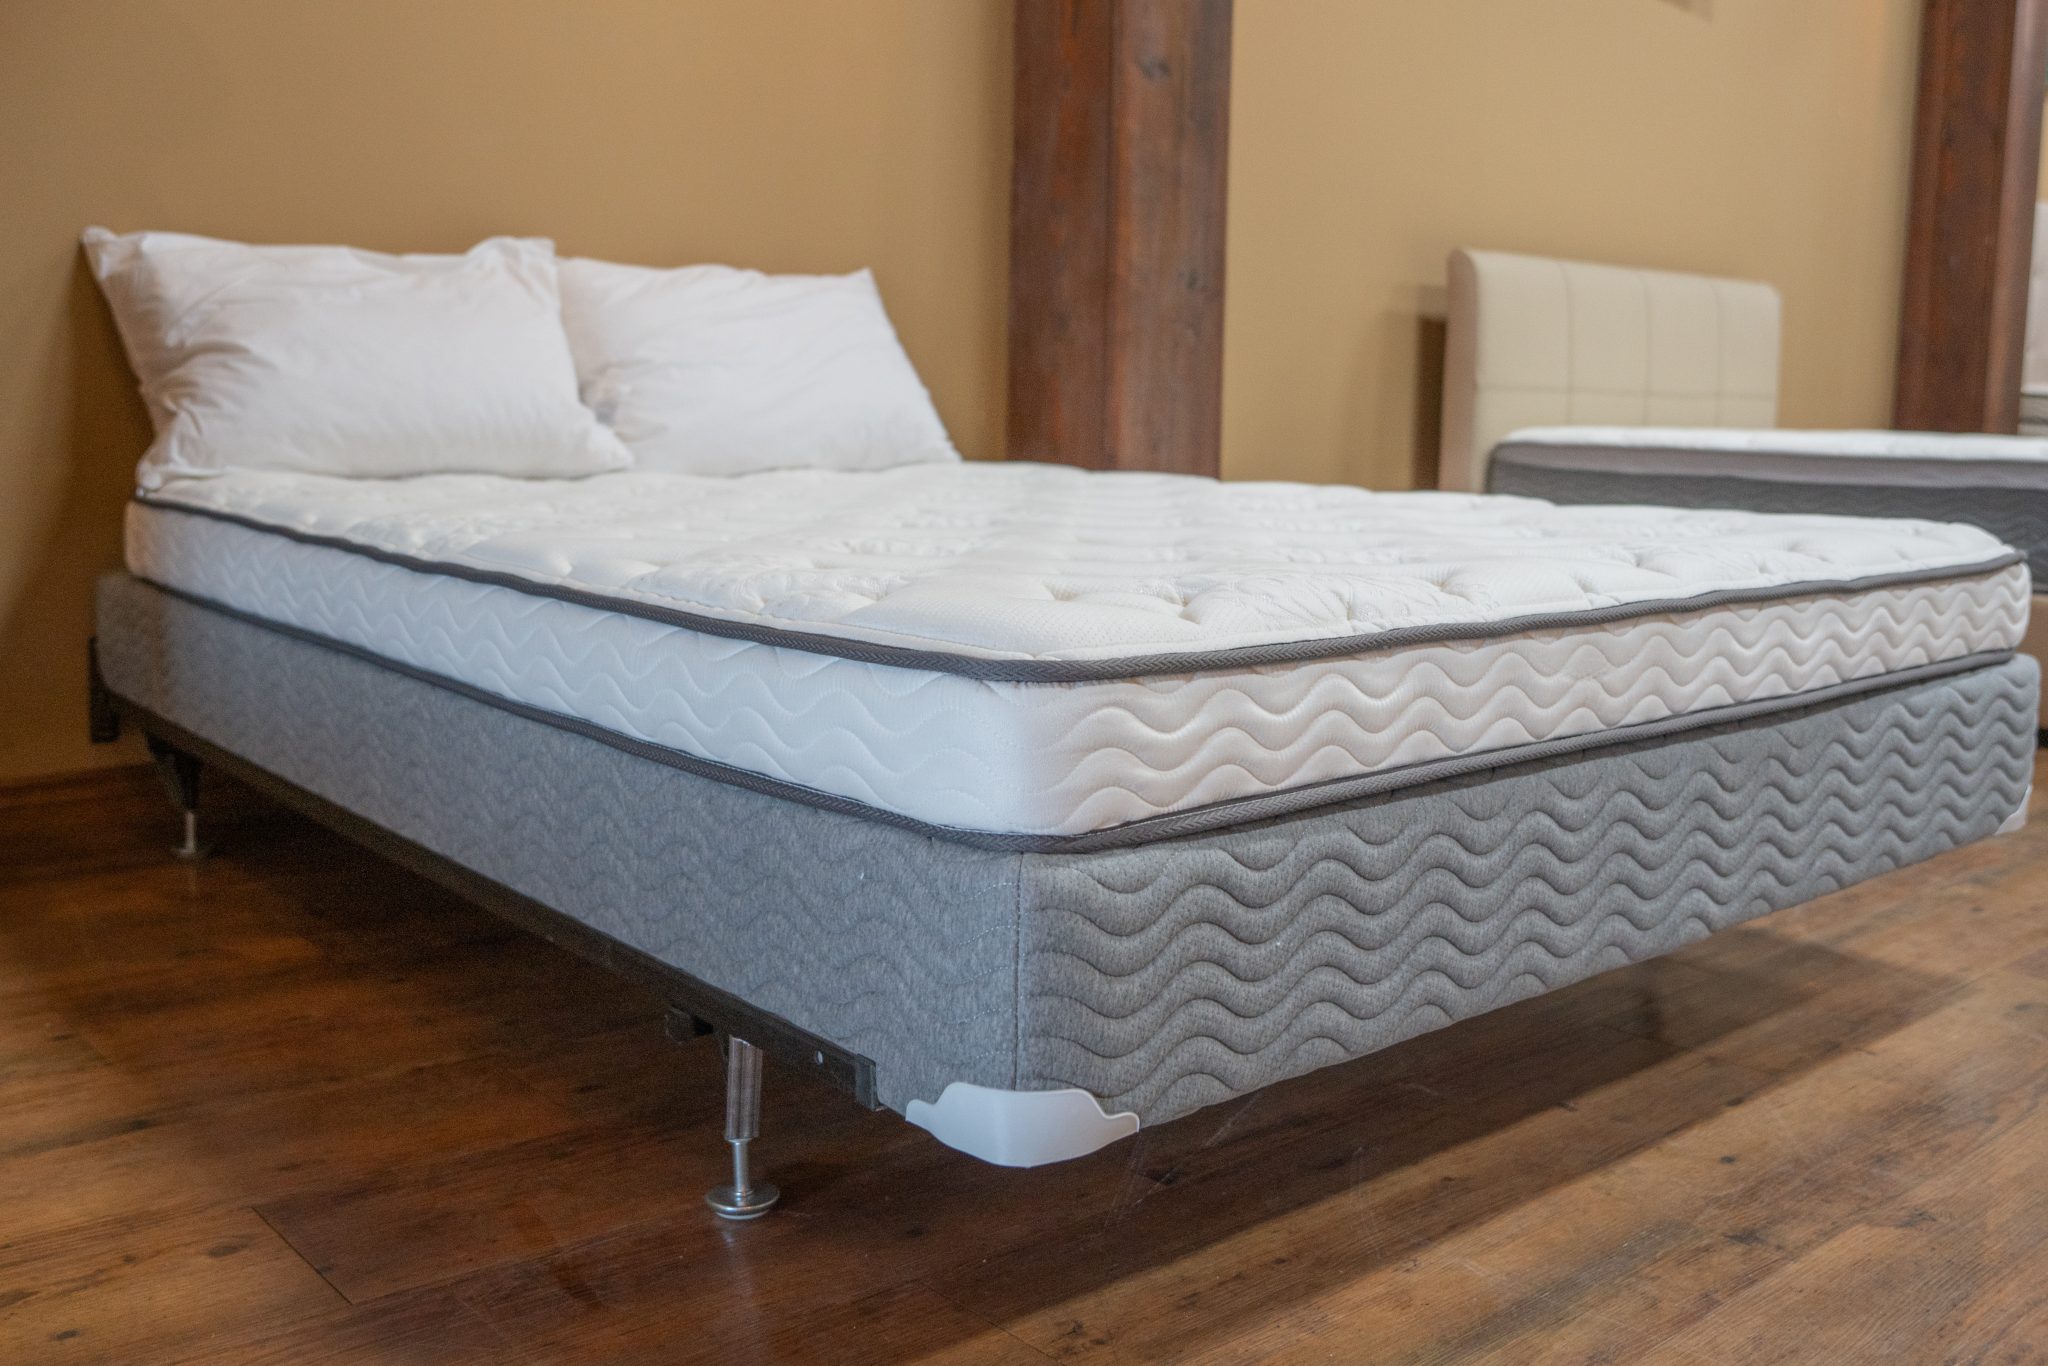 30 inch replacement mattress